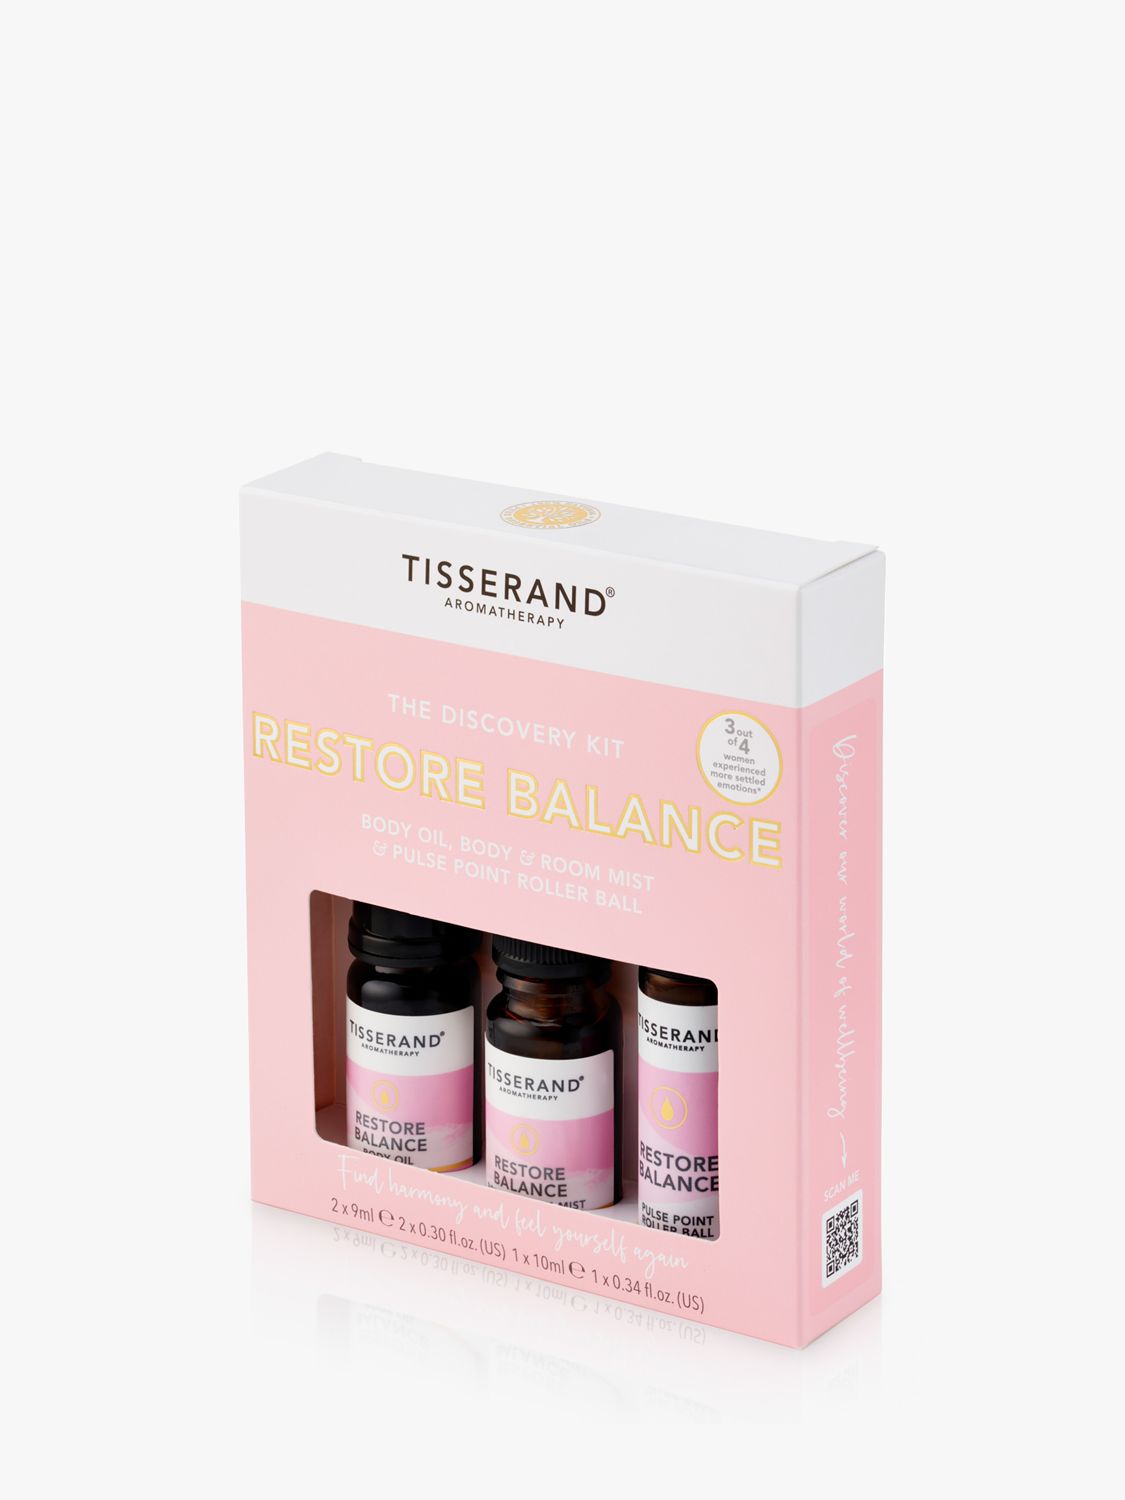 Tisserand Aromatherapy Restore Balance Discovery Kit Bodycare Gift Set 5